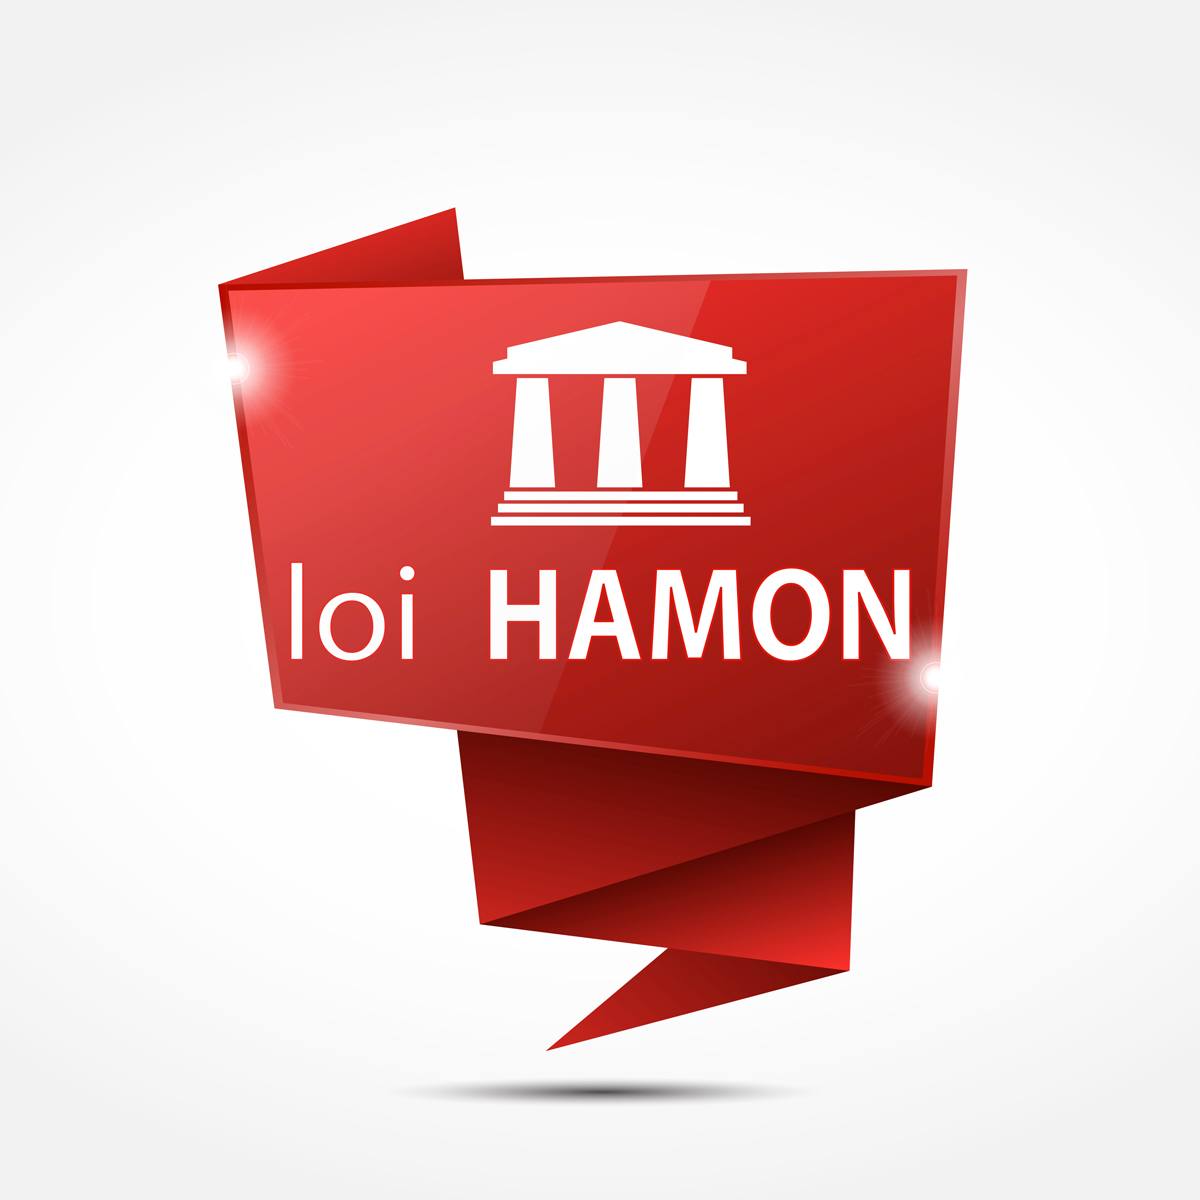 loi-hamon-db-glass-performance